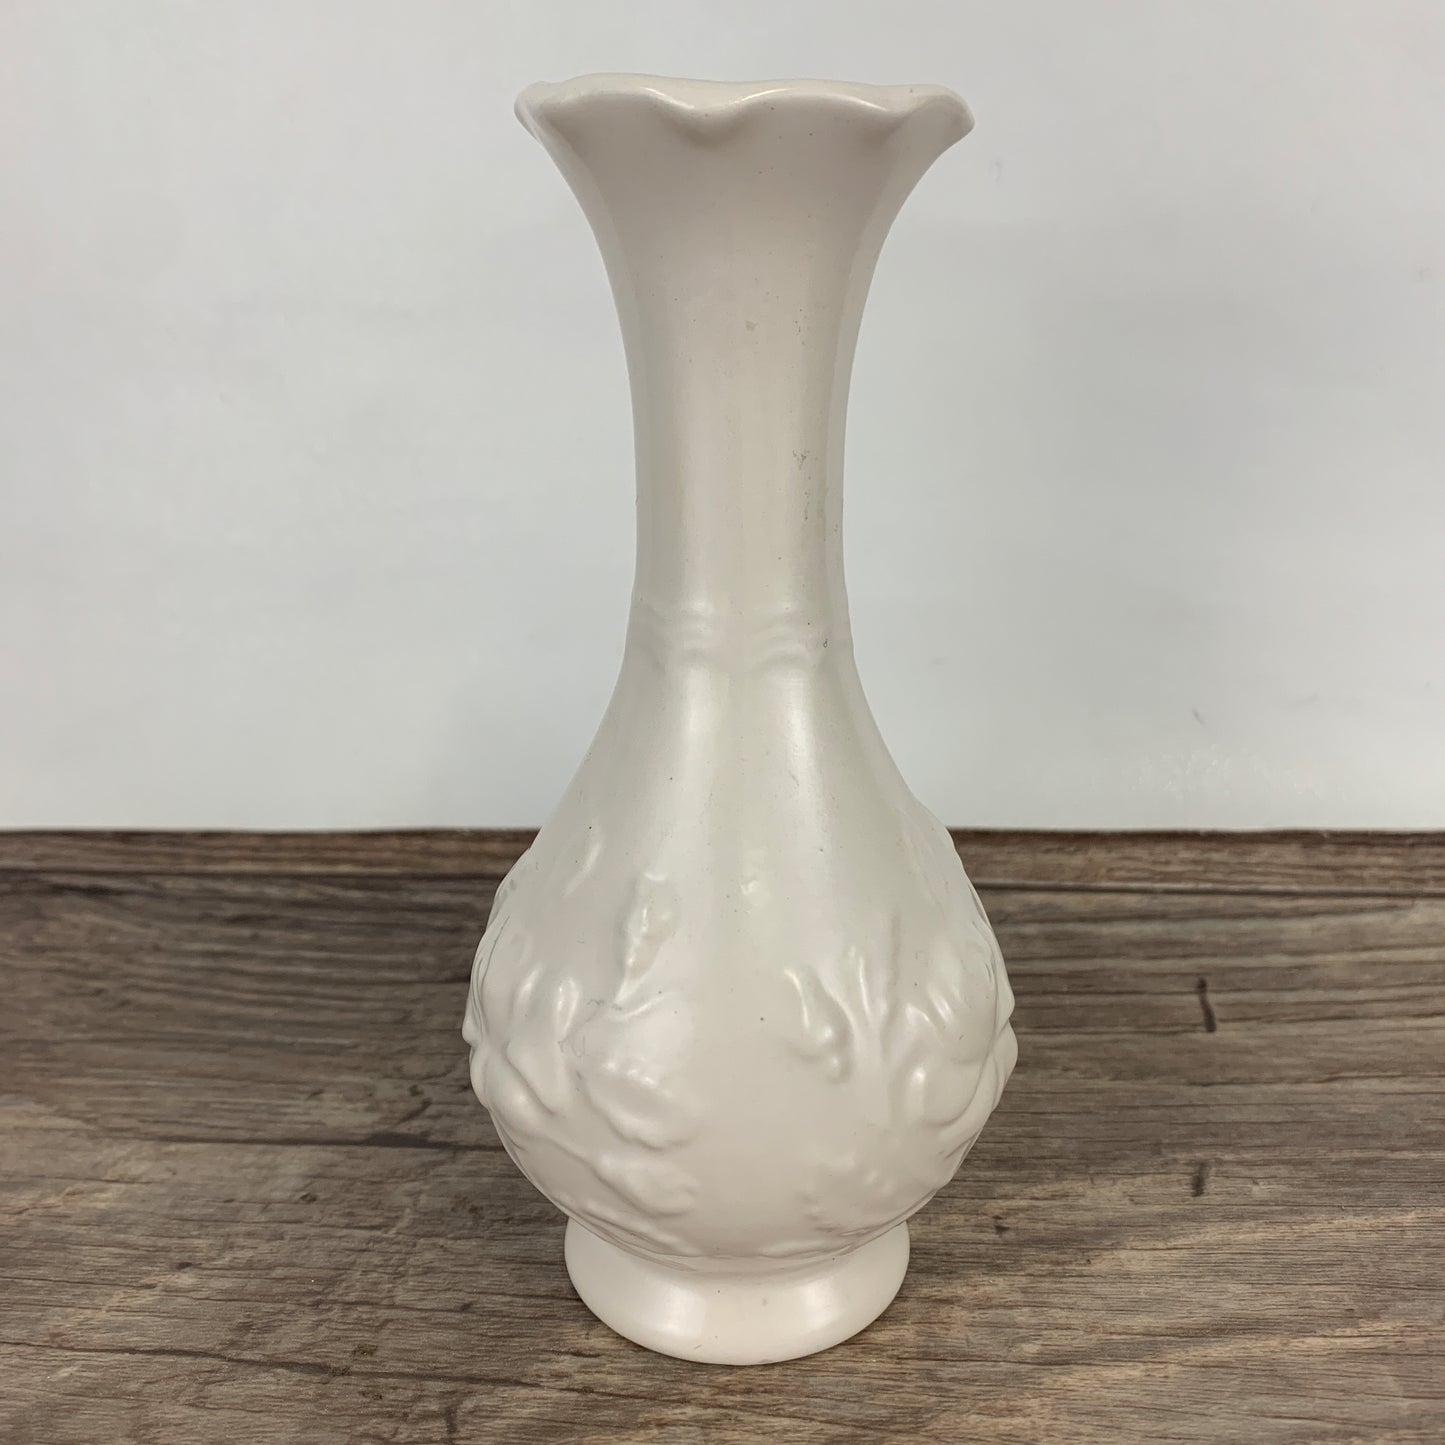 White Ceramic Vase with Raised Floral Pattern, Small White Bud Vase